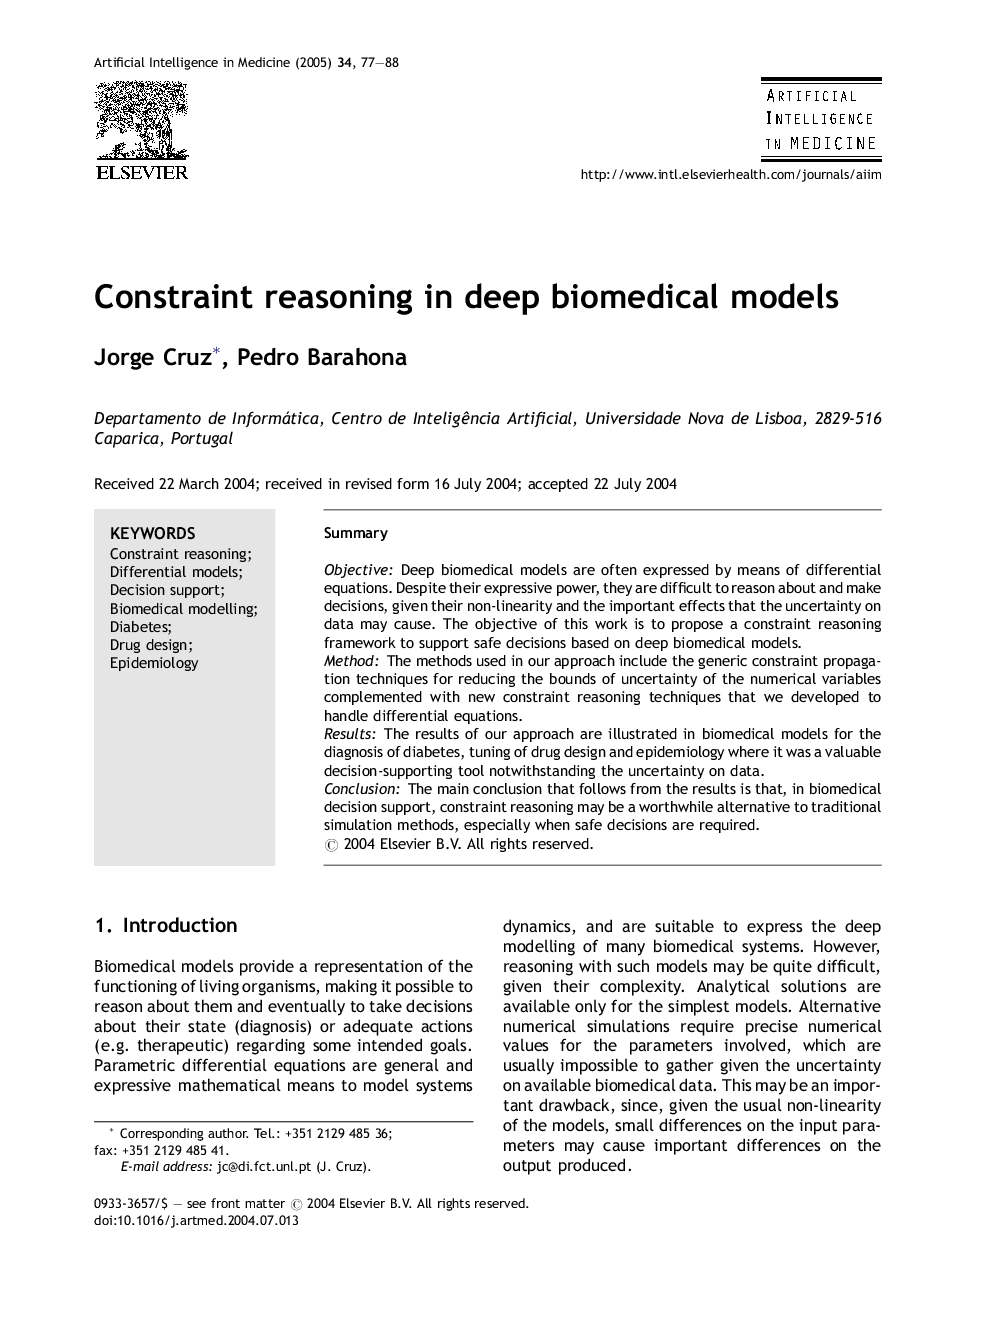 Constraint reasoning in deep biomedical models